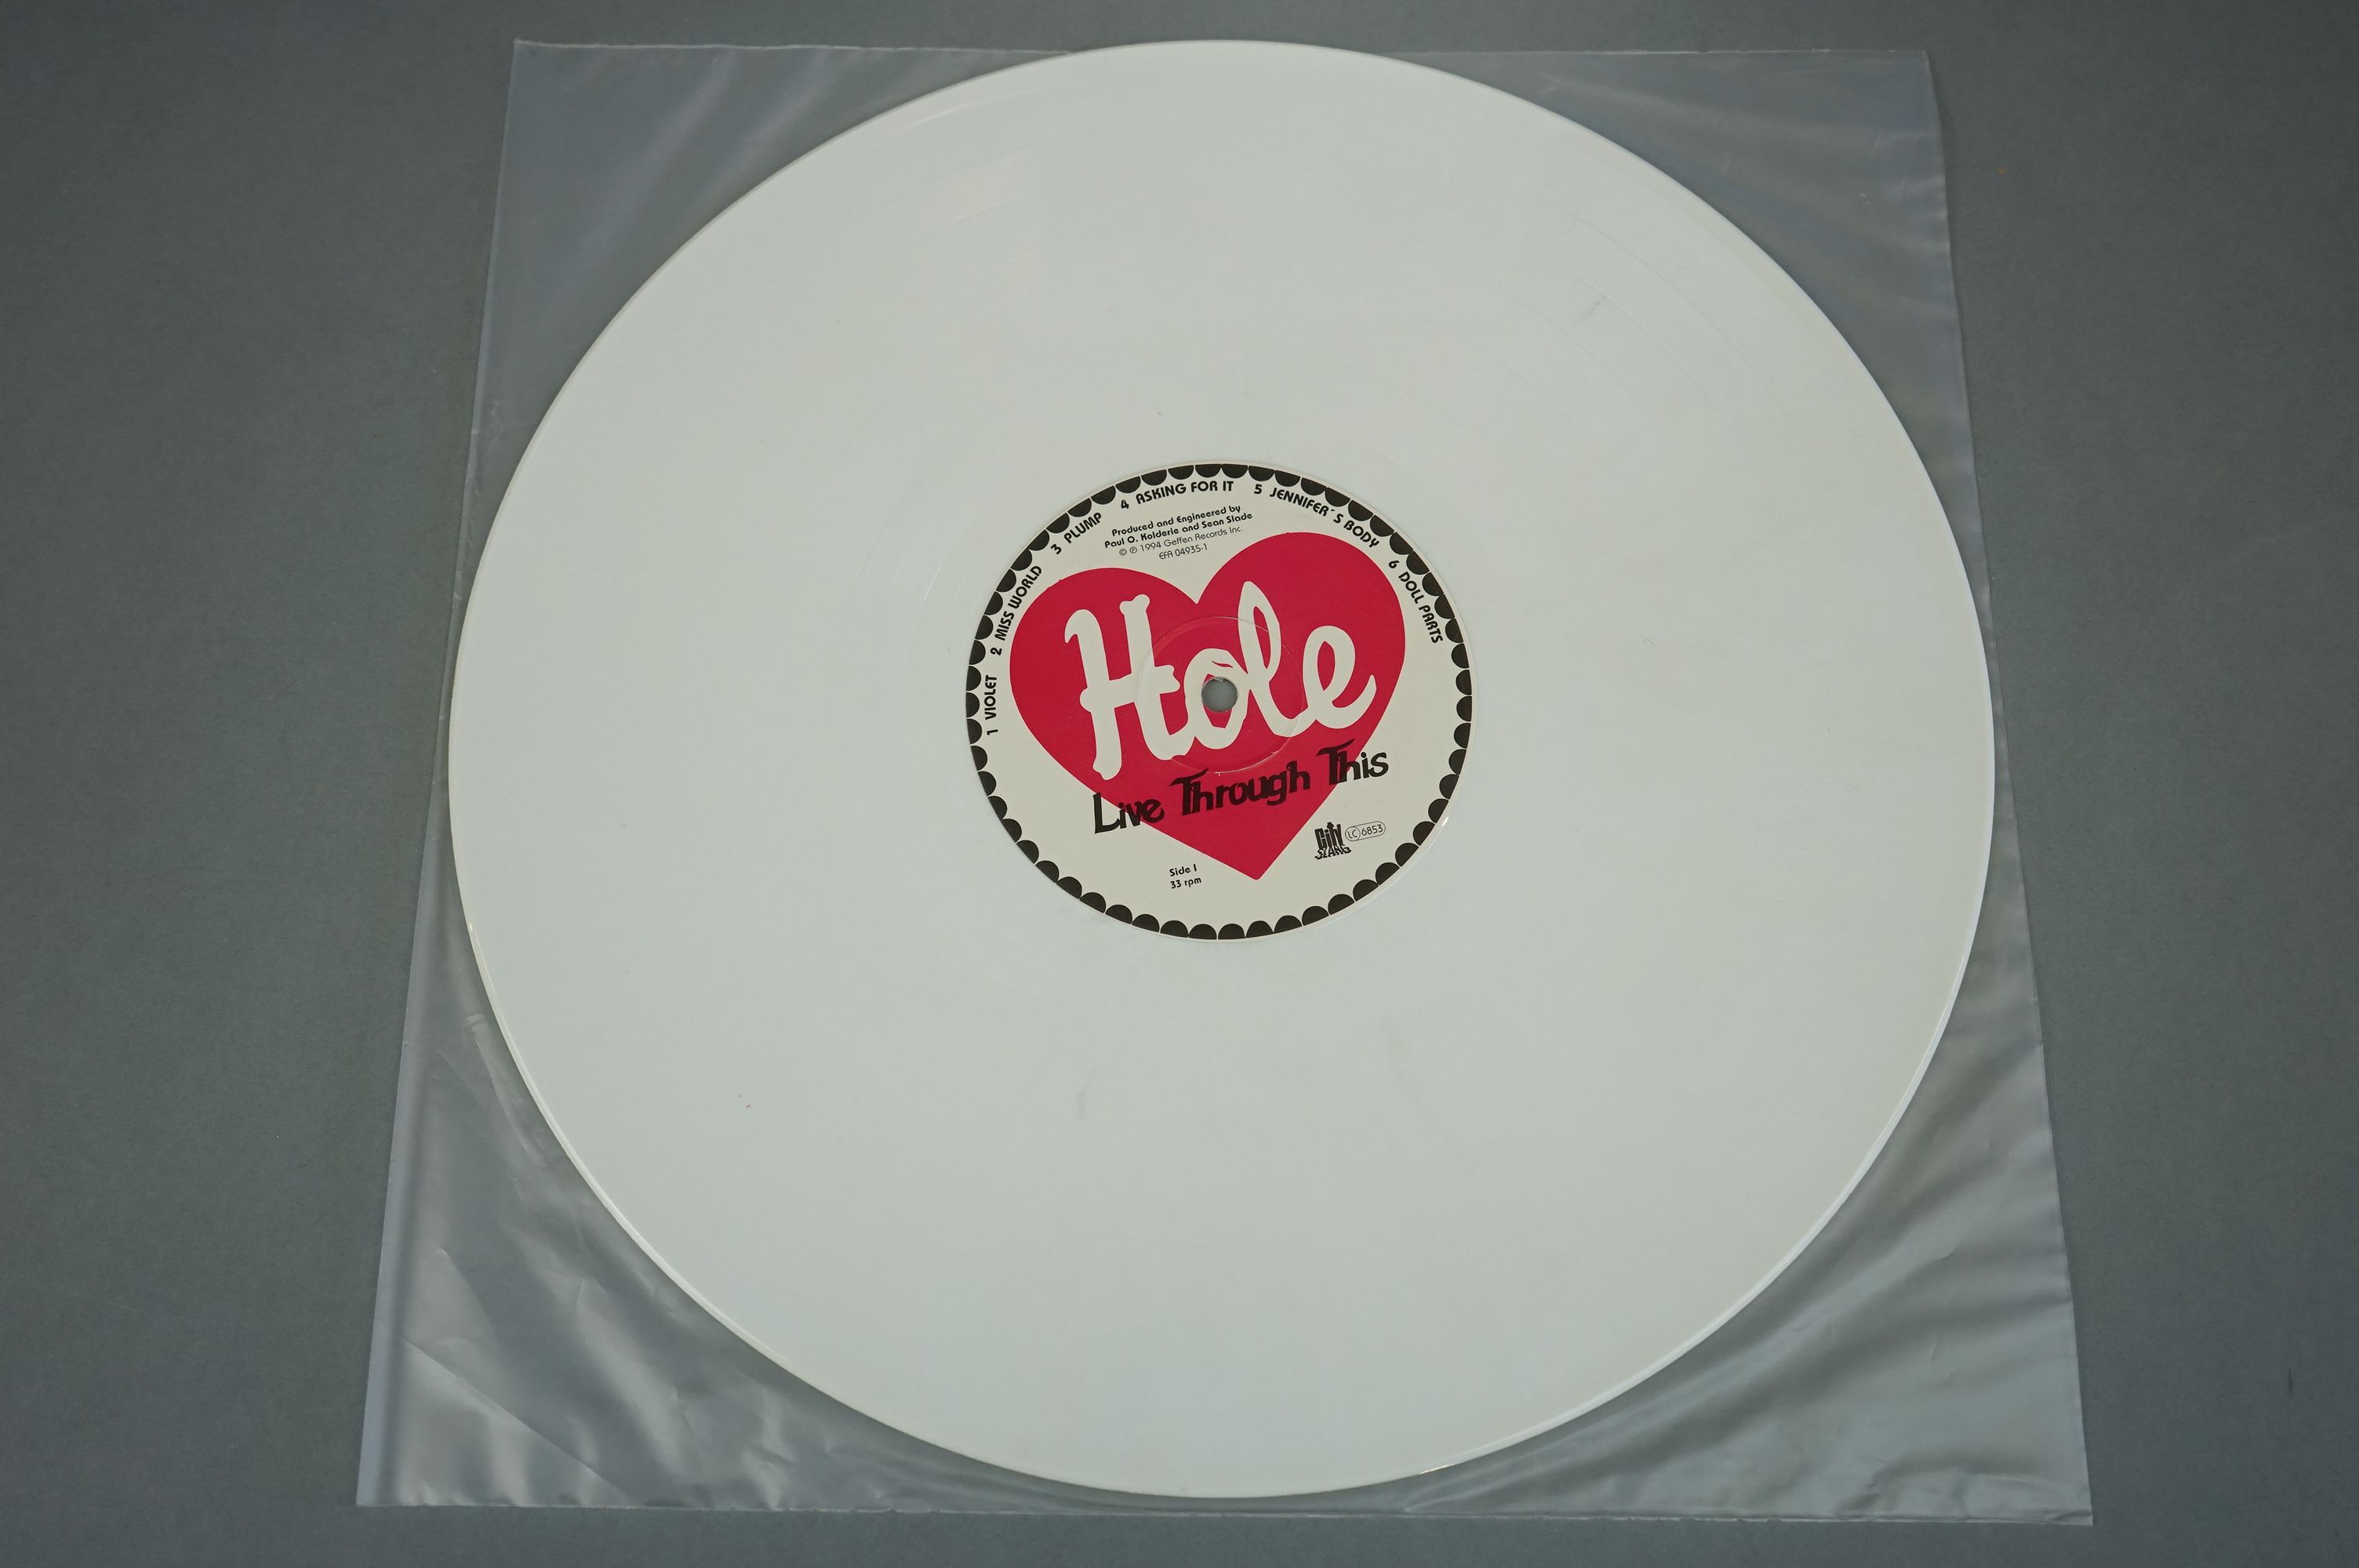 Vinyl - Hole Live Through This LP ltd edn white vinyl on City Slang LC683 vg++ - Image 4 of 4